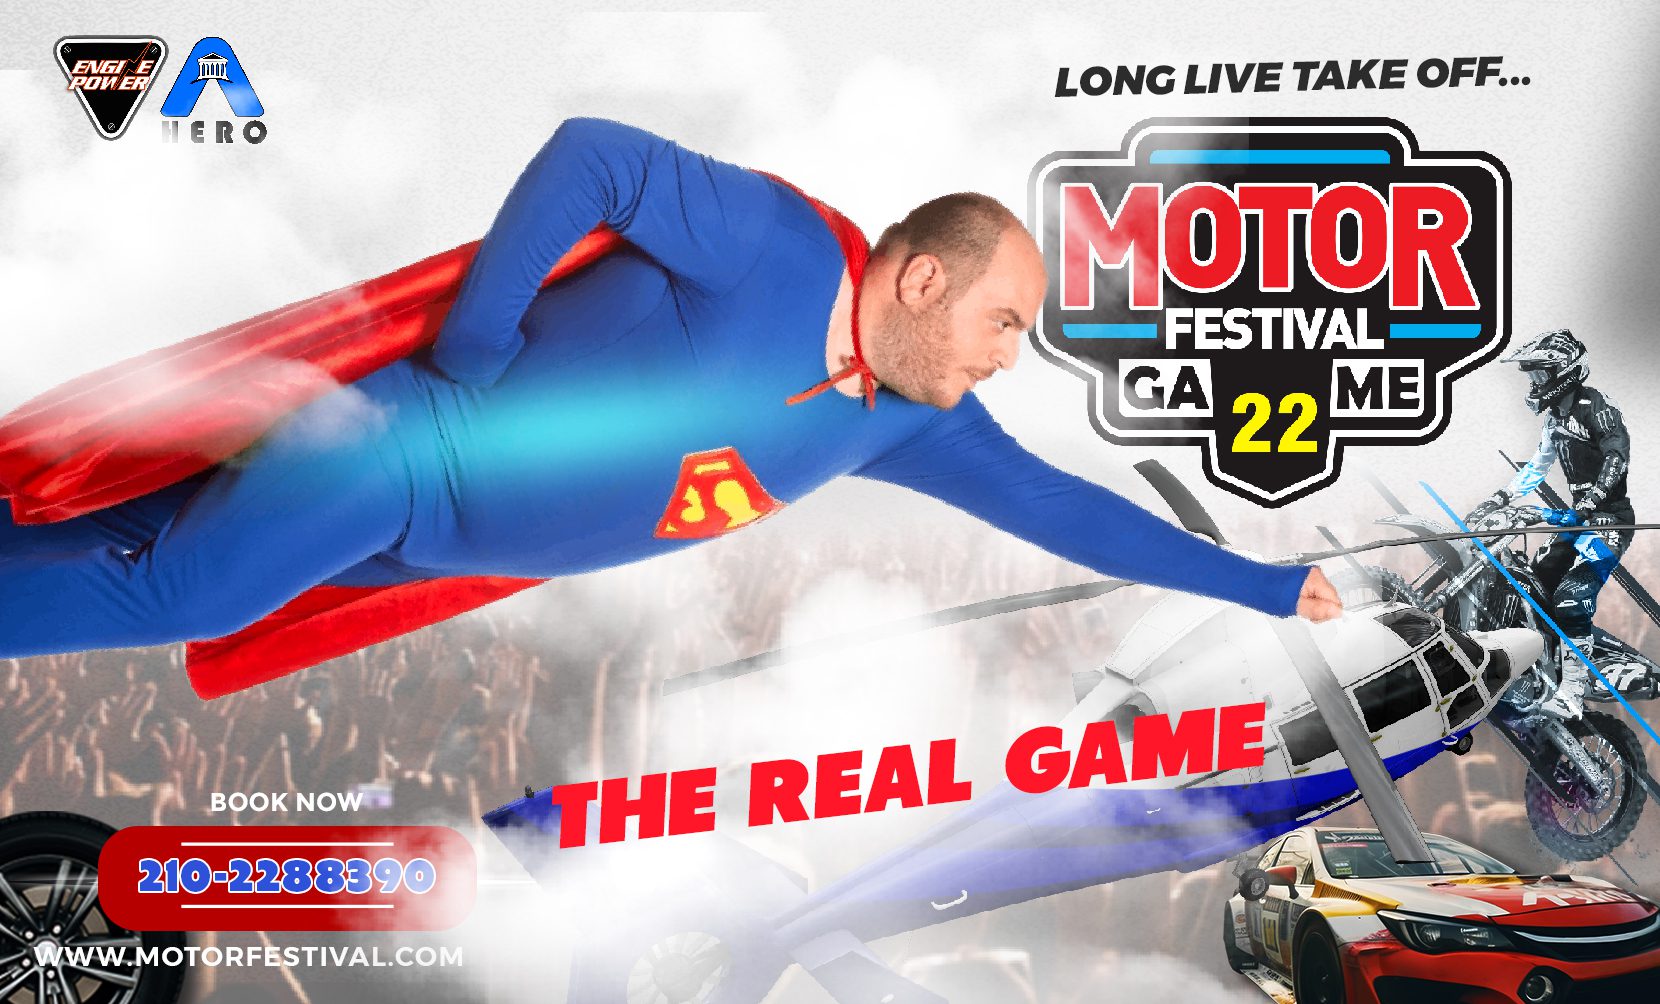 O Superman Φάνης Λαμπρόπουλος θα παρουσιάσει τους εκθέτες του 22ου Motor Festival